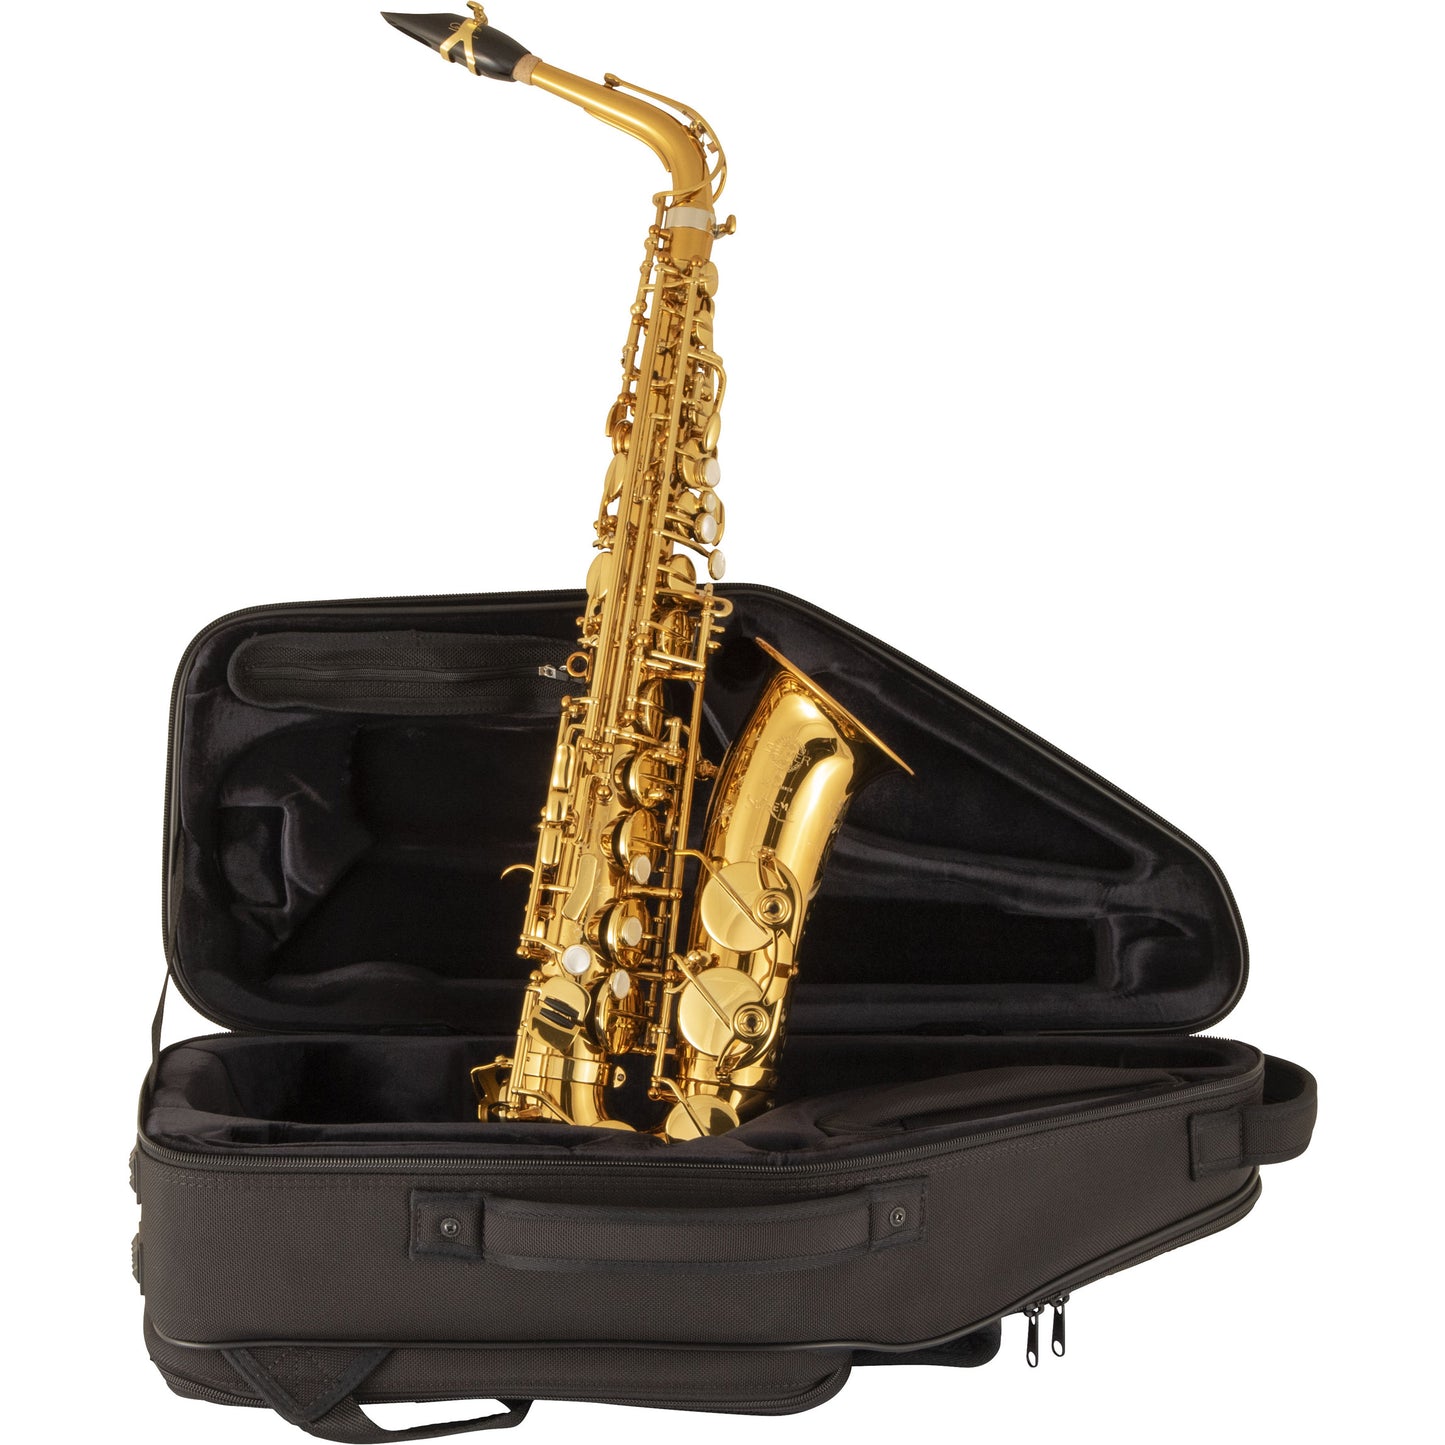 Selmer Paris 92DL Supreme Professional Alto Saxophone Dark Gold Lacquer